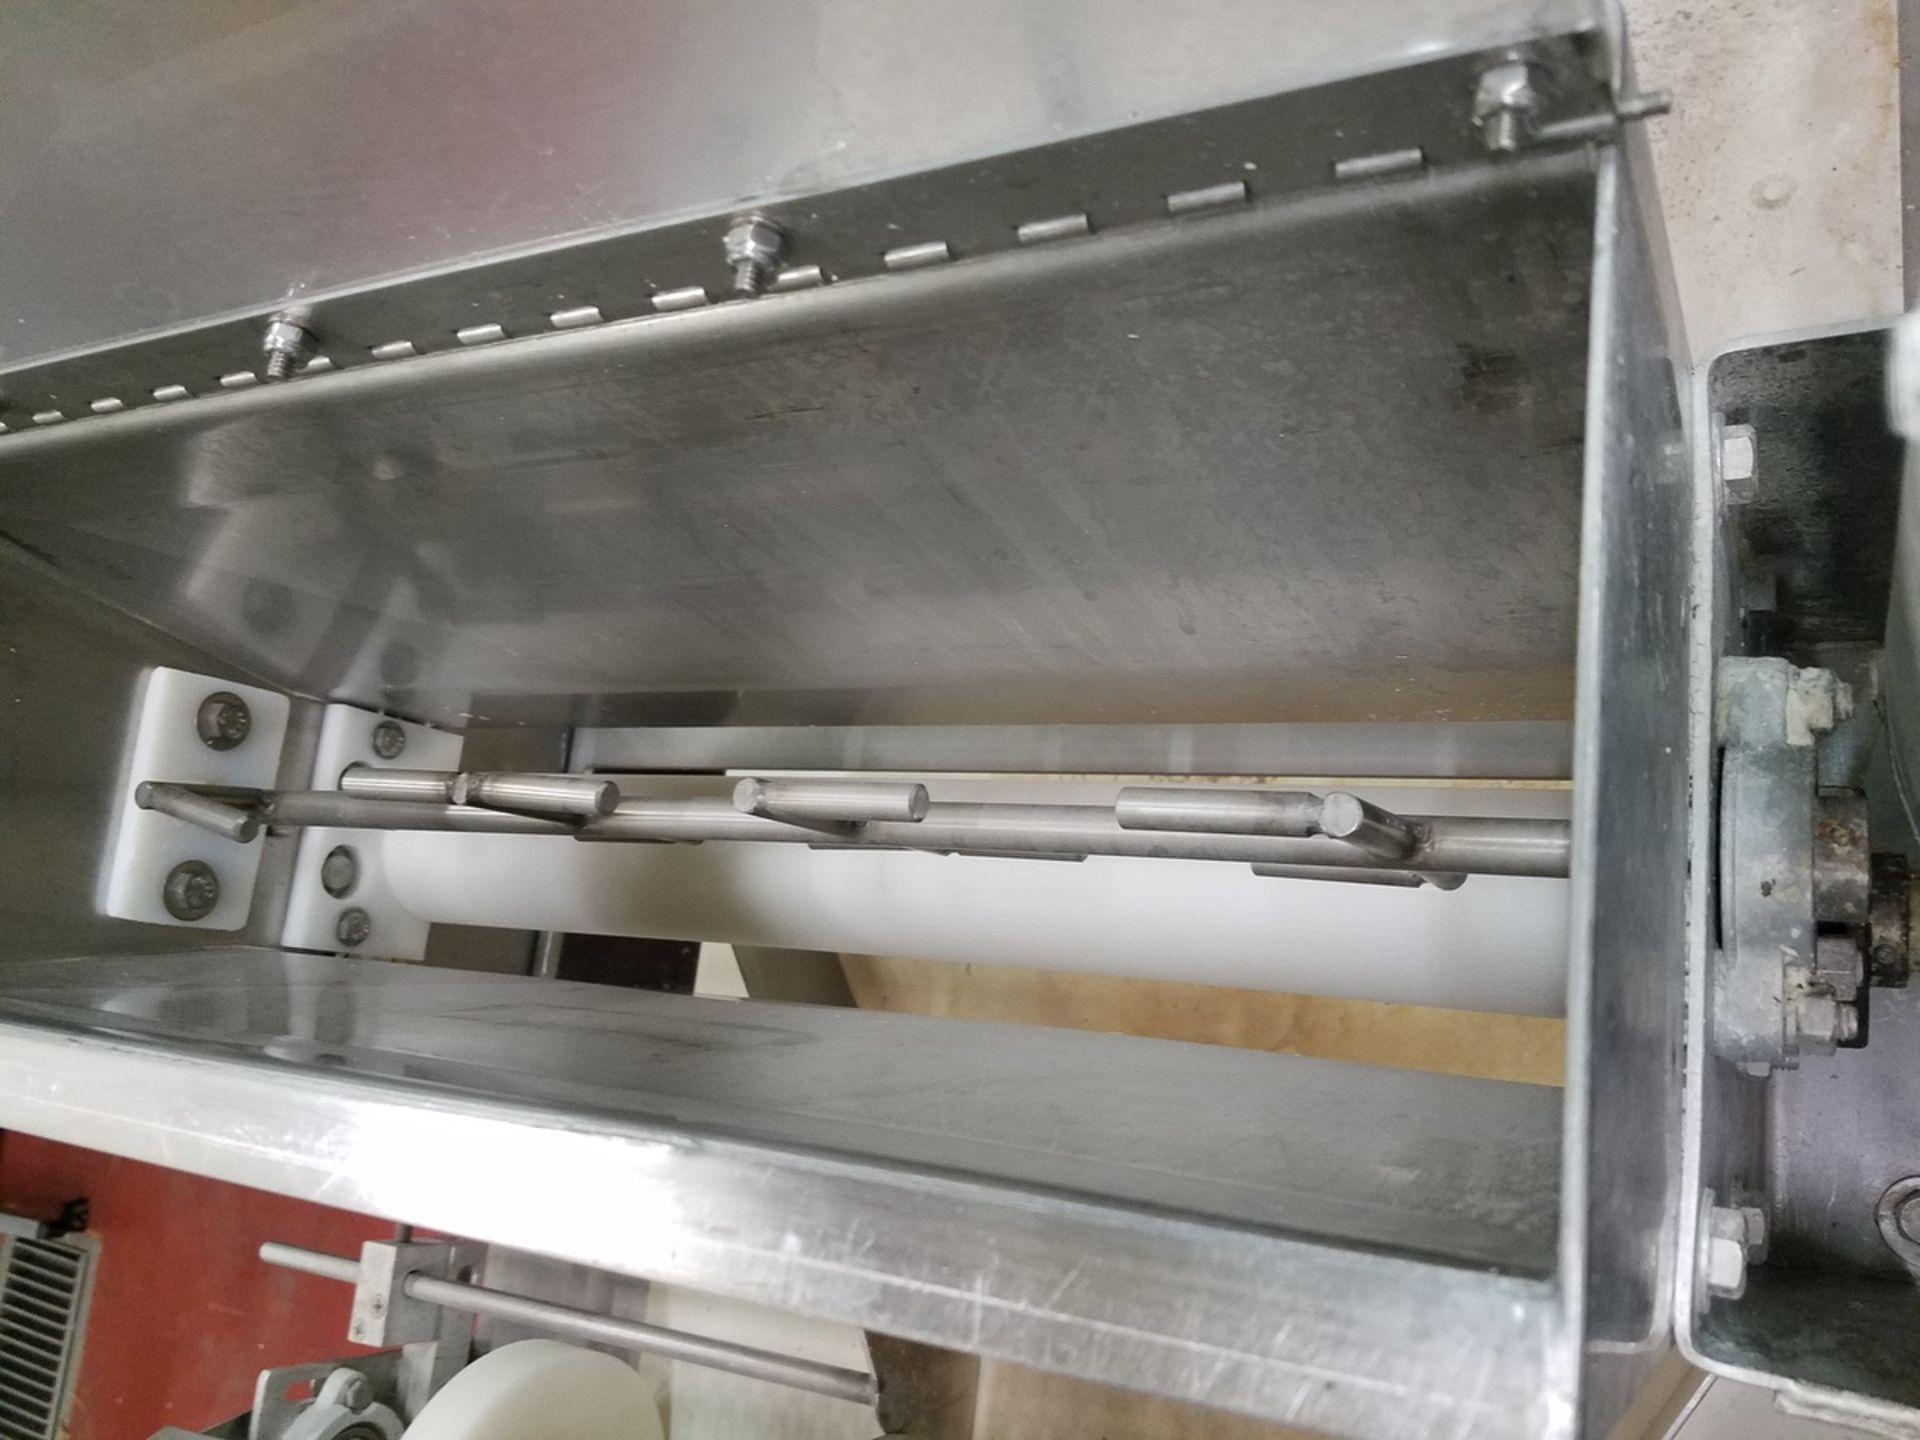 Power Conveyor Flour Sifter/Applicator | Rig Fee: $200 - Image 2 of 2